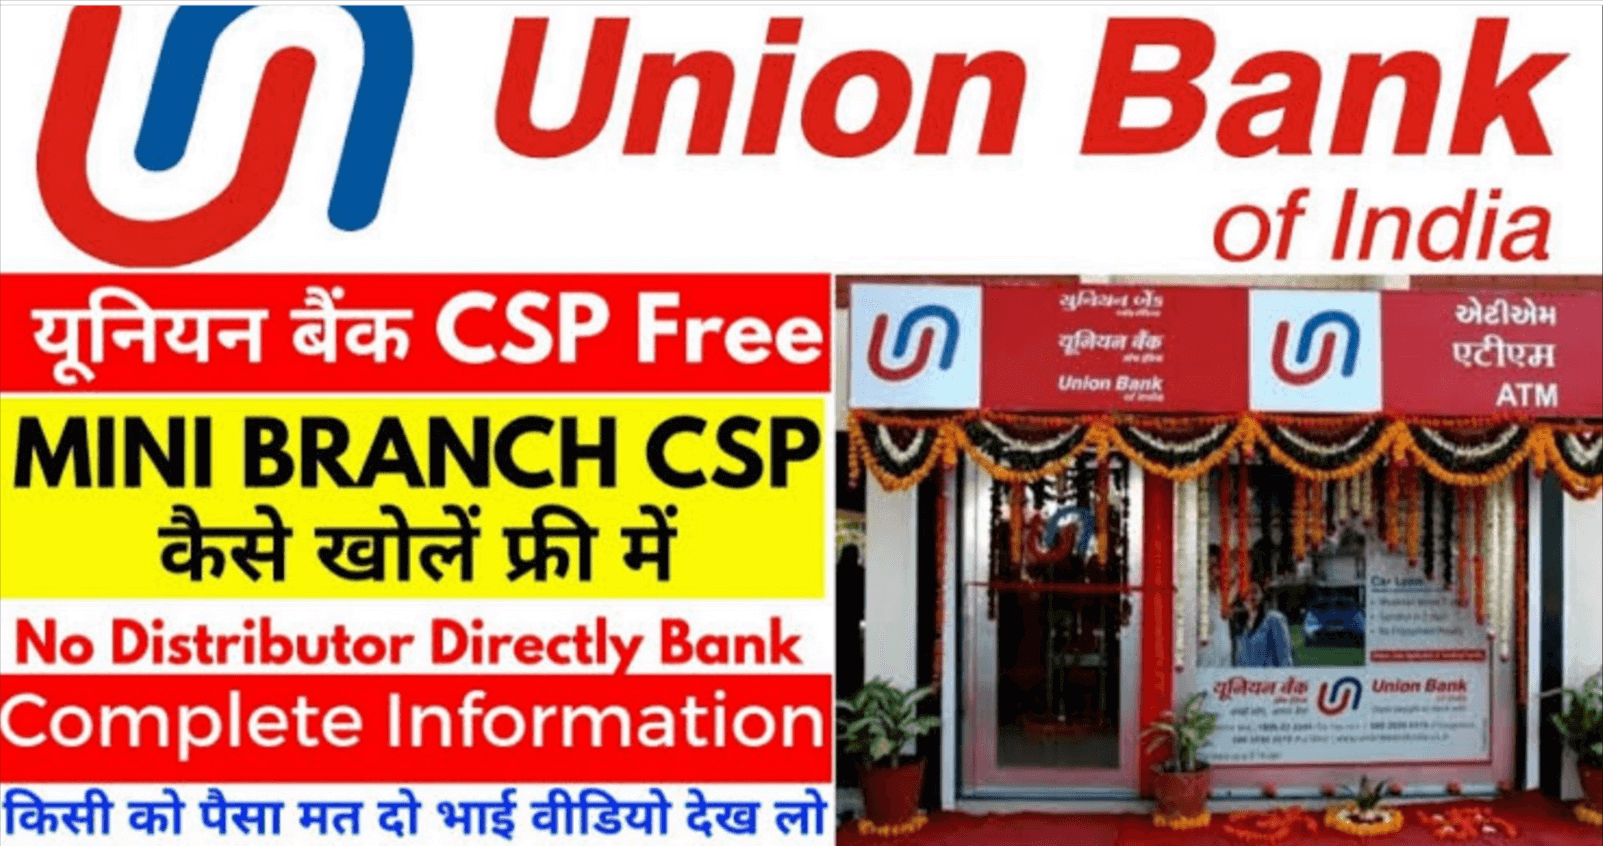 Union Bank CSP